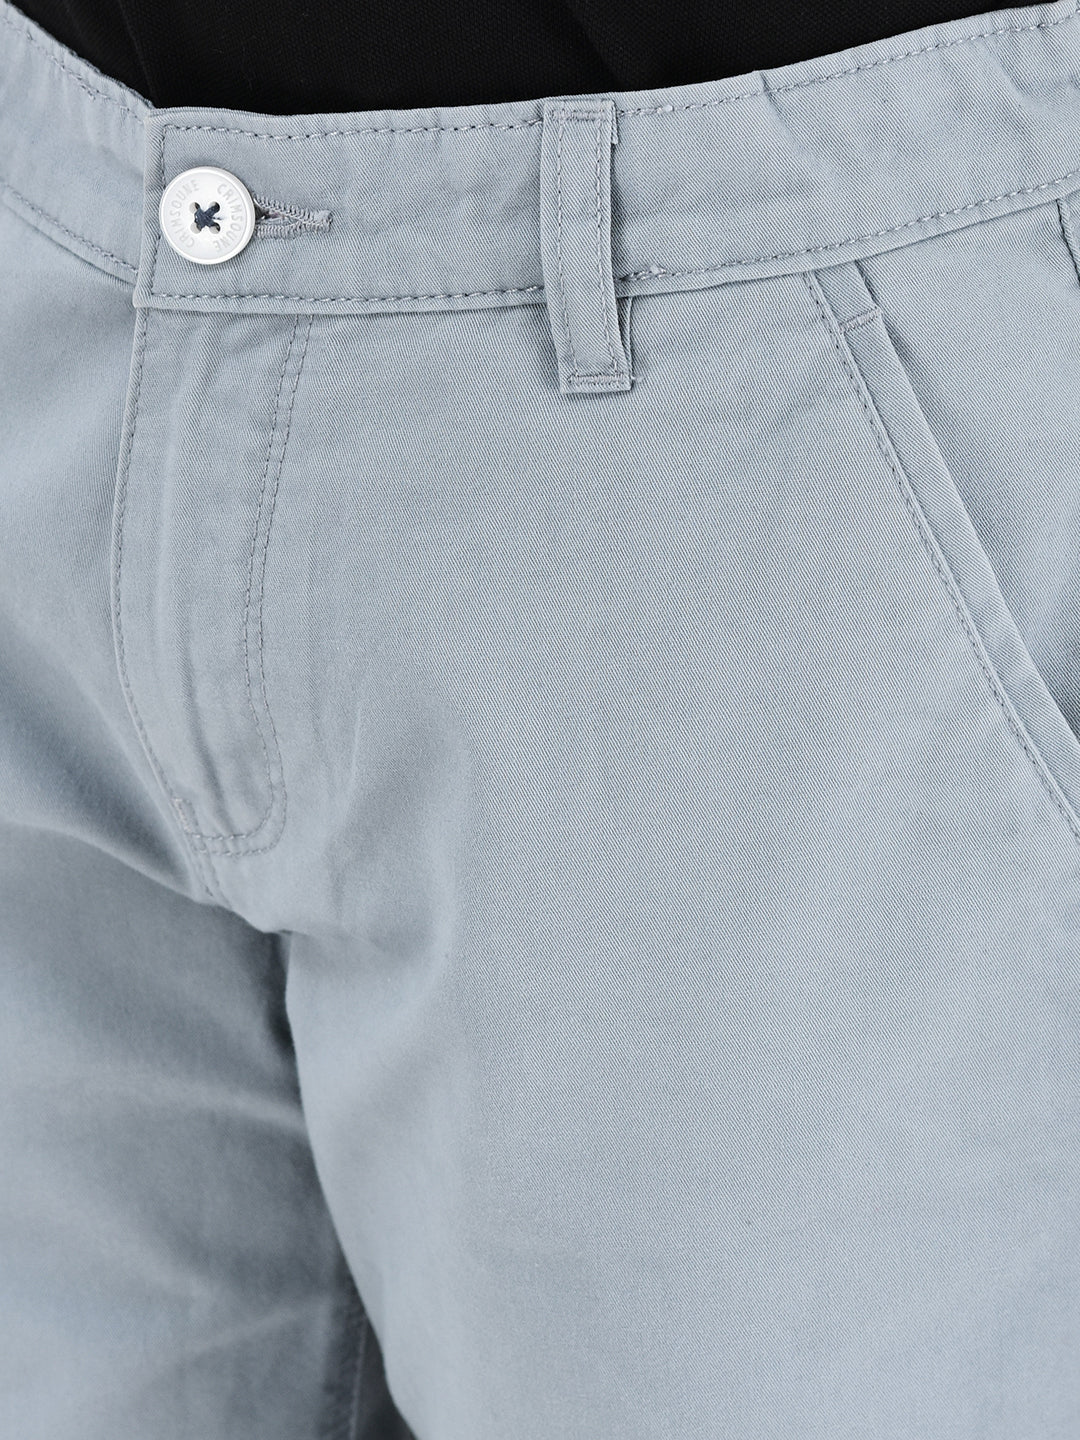 Blue Shorts-Boys Shorts-Crimsoune Club